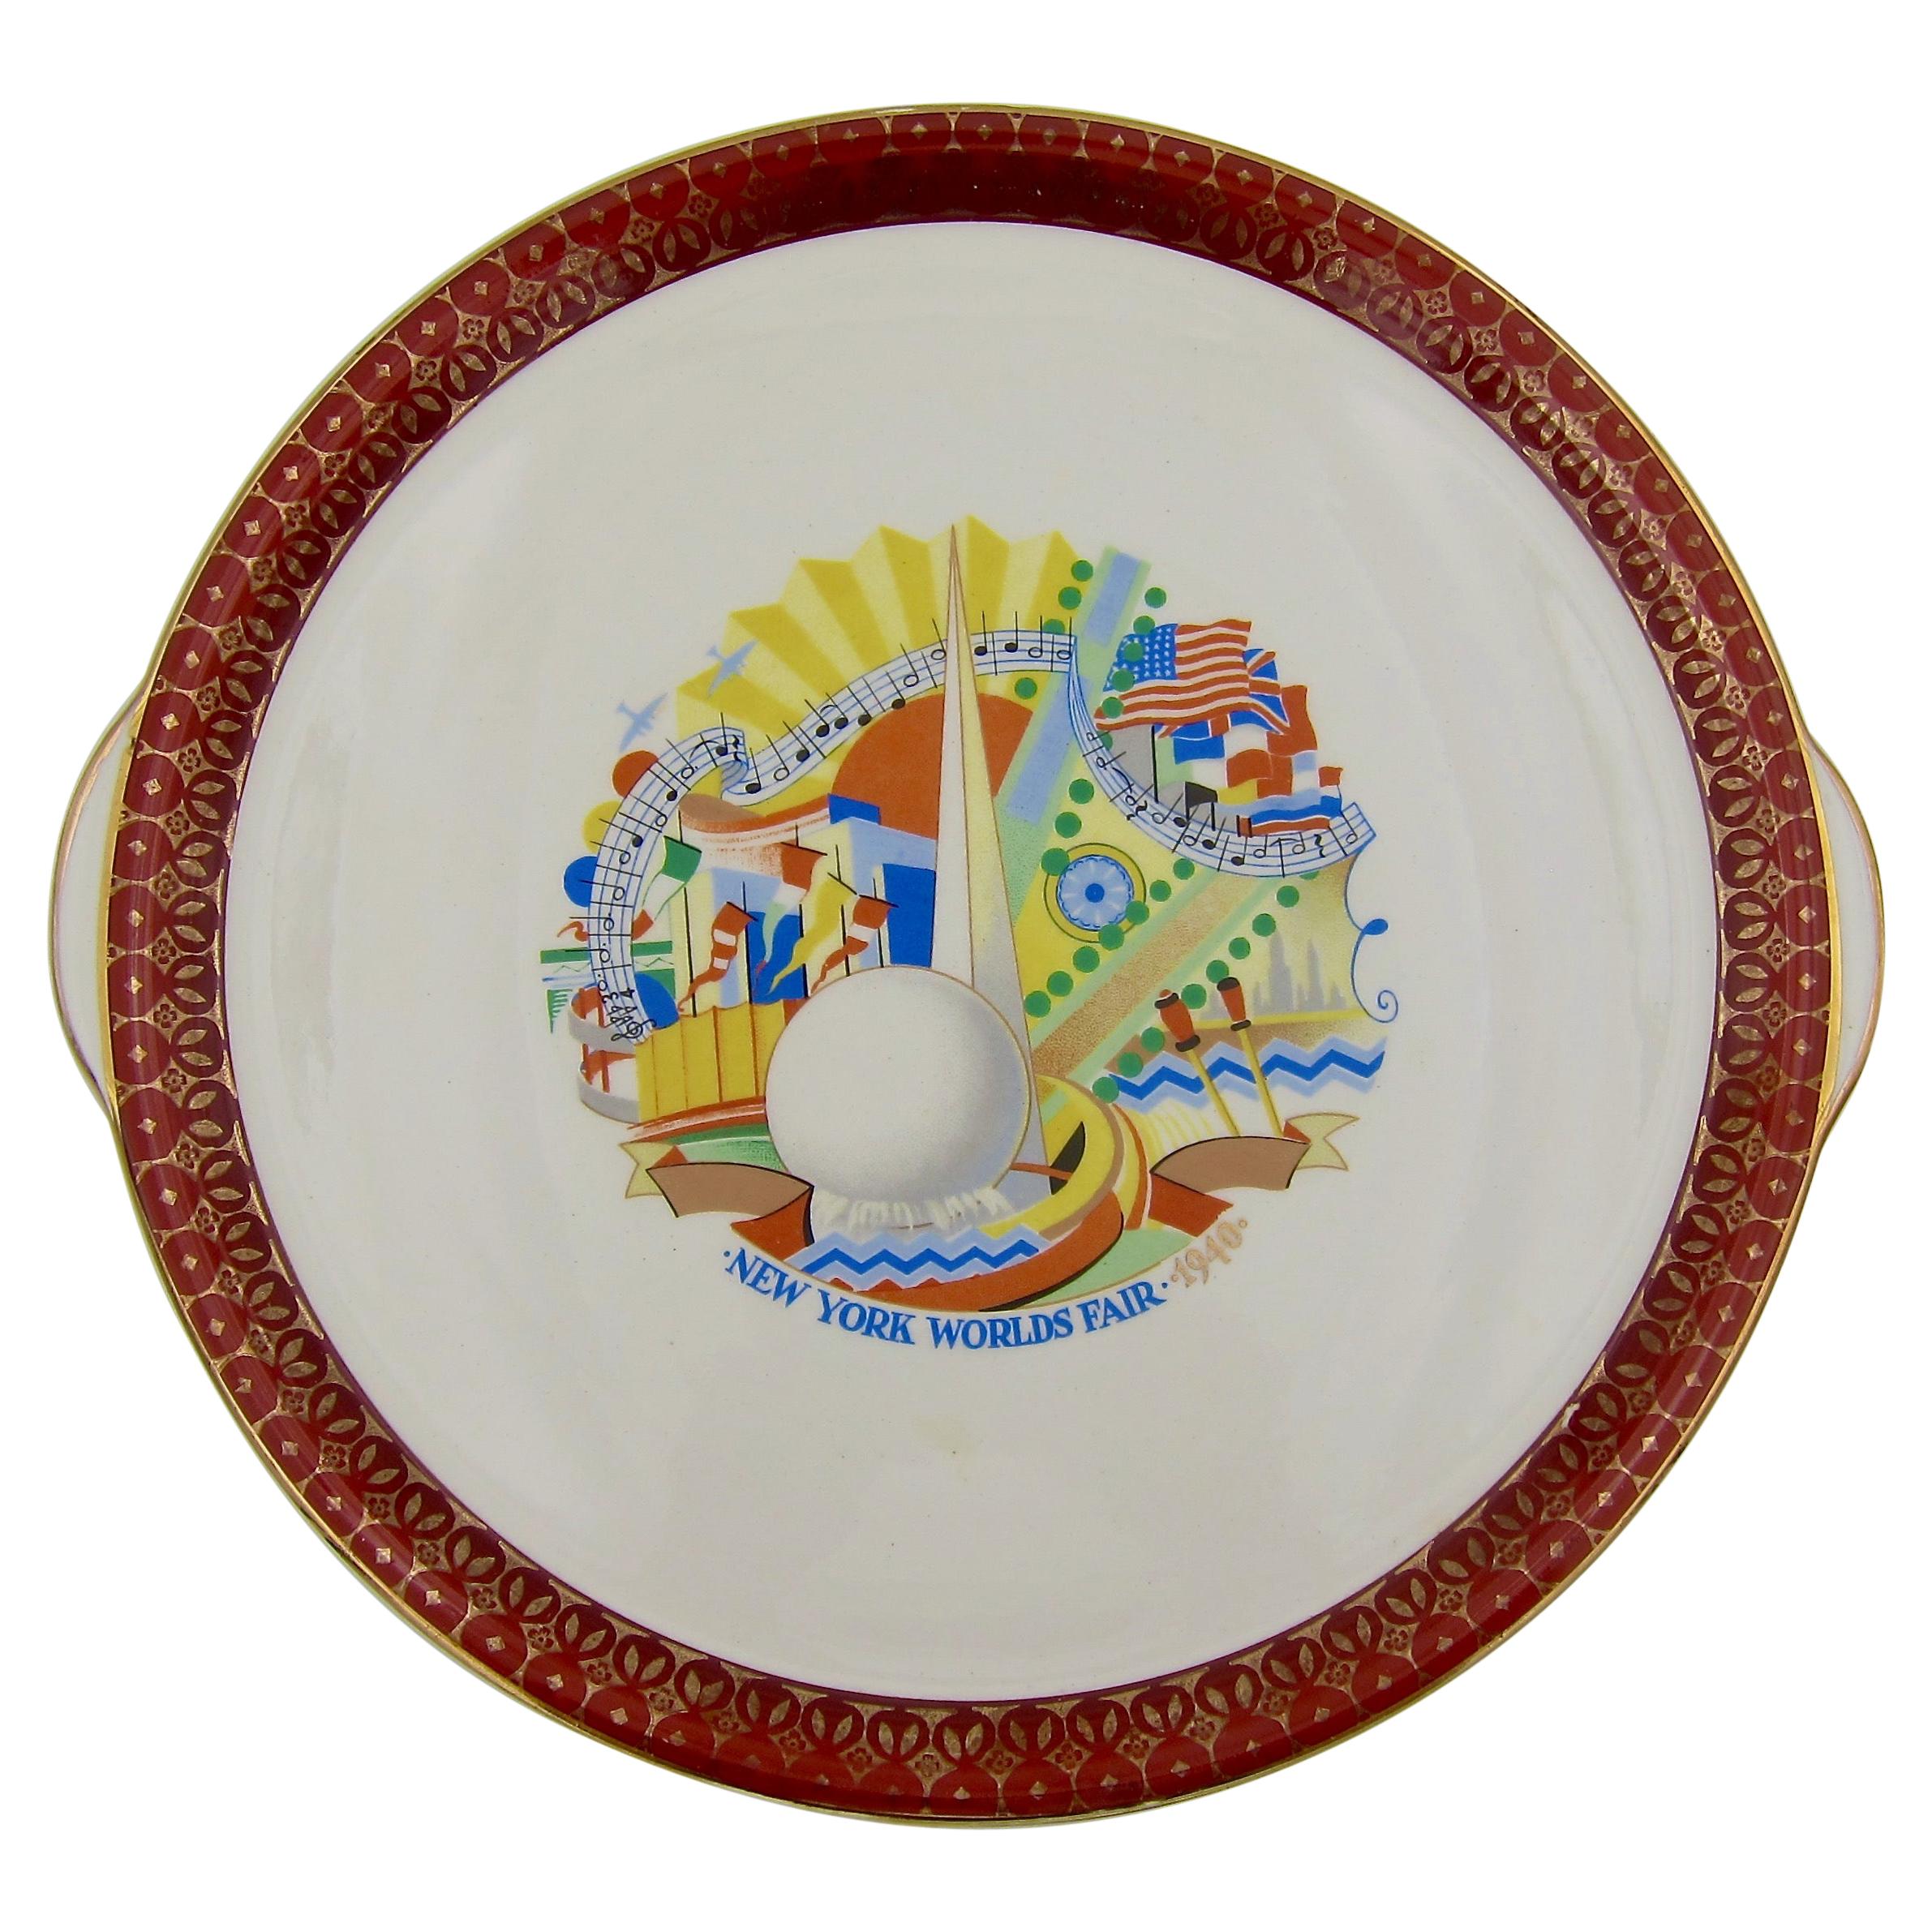 Art Deco Platter from the 1939-40 New York World's Fair